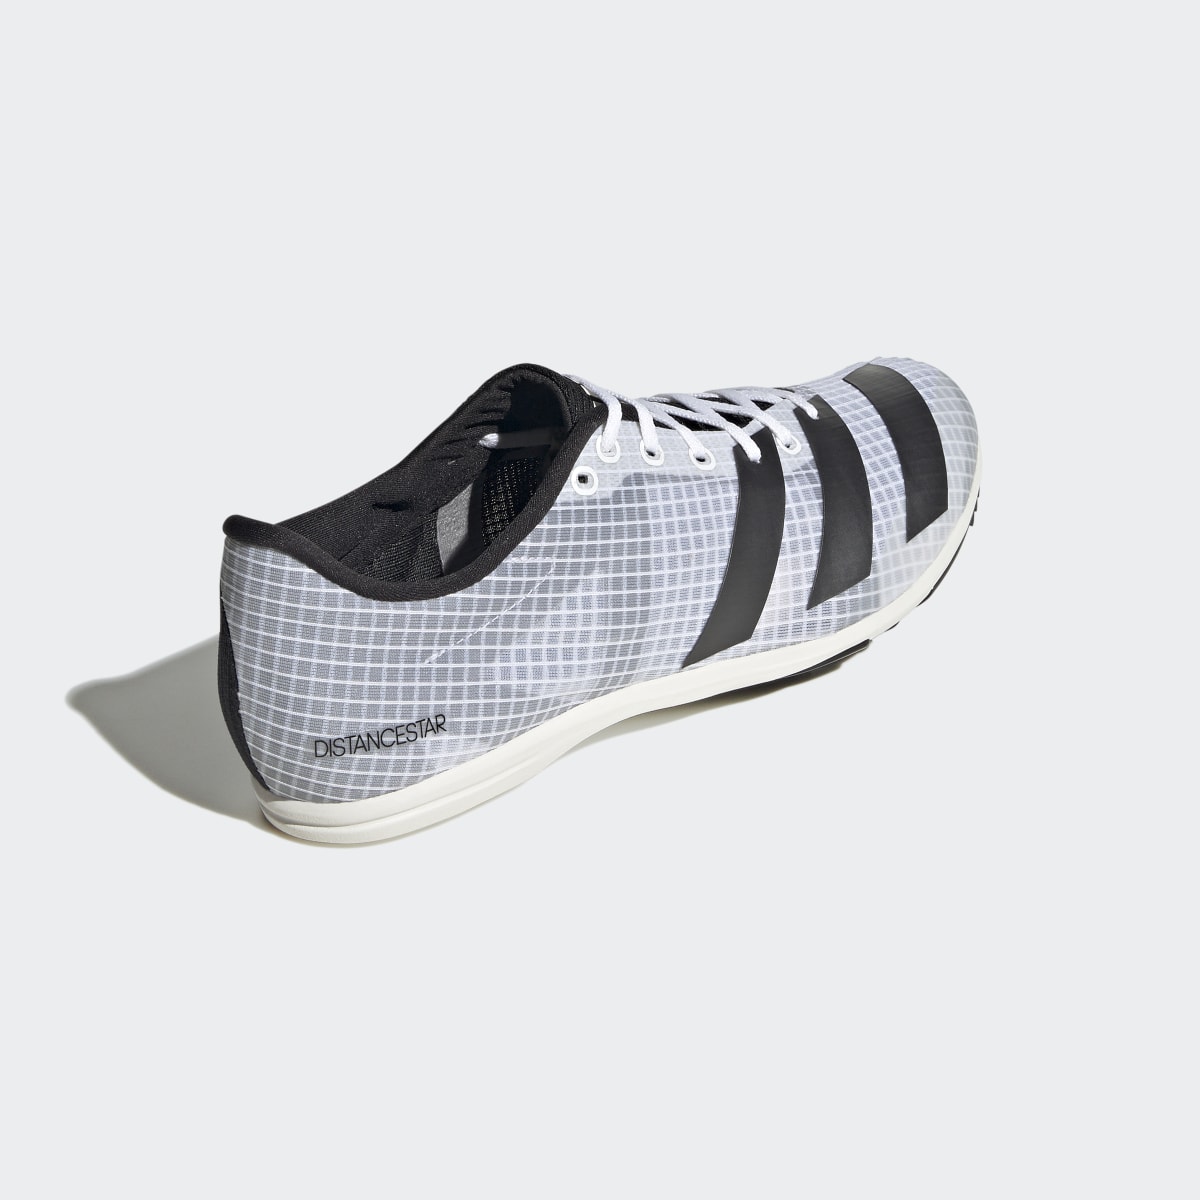 Adidas DistanceStar Spike-Schuh. 6